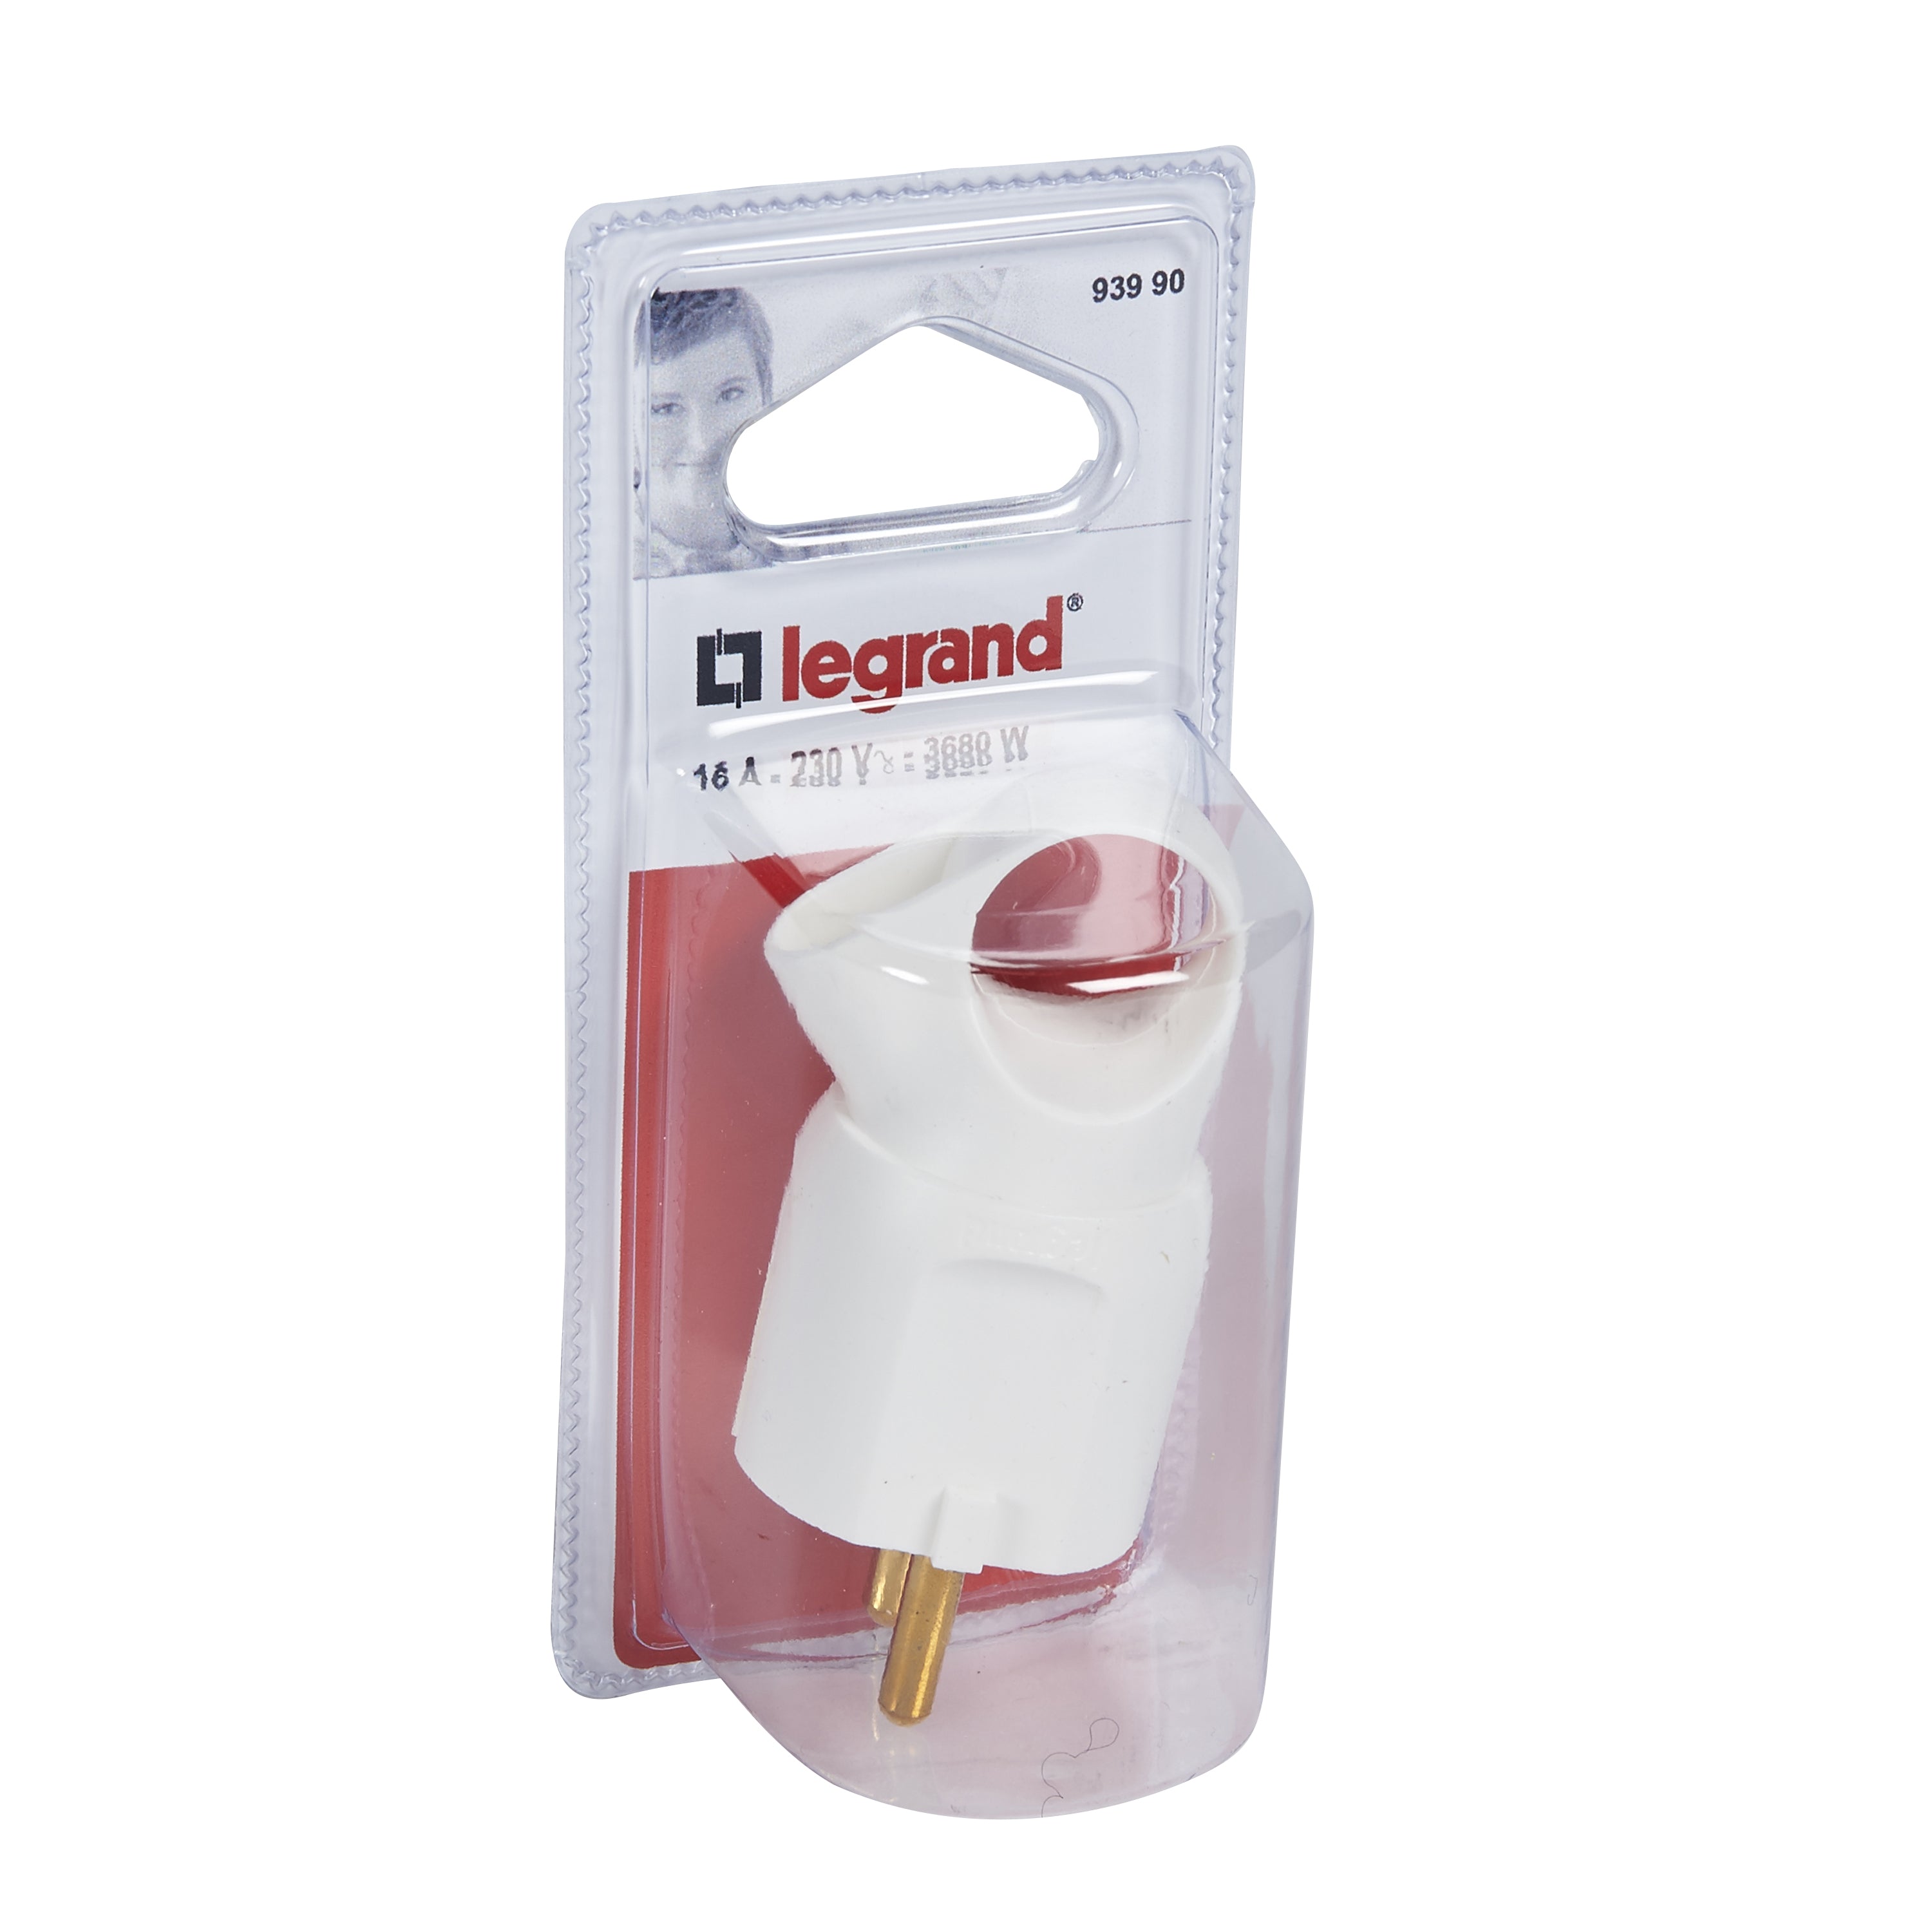 Legrand - Stekker 2 P+A schuko Witte ring - 093990